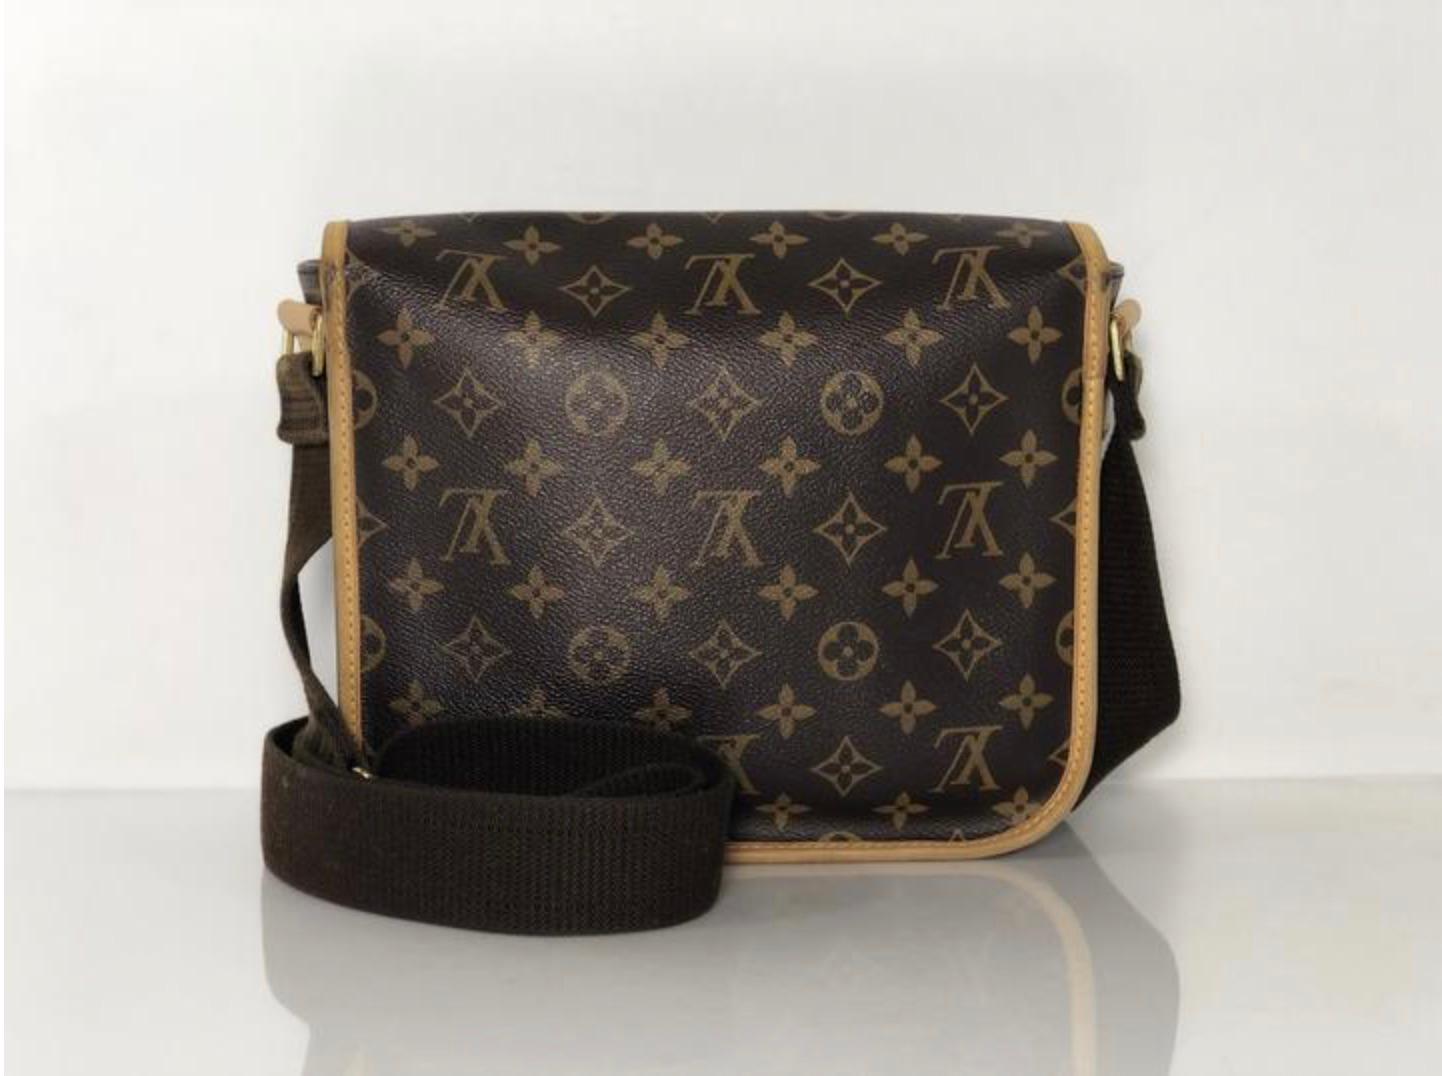  Louis Vuitton Monogram Messenger Bosphore PM Crossbody Handbag In Good Condition For Sale In Saint Charles, IL